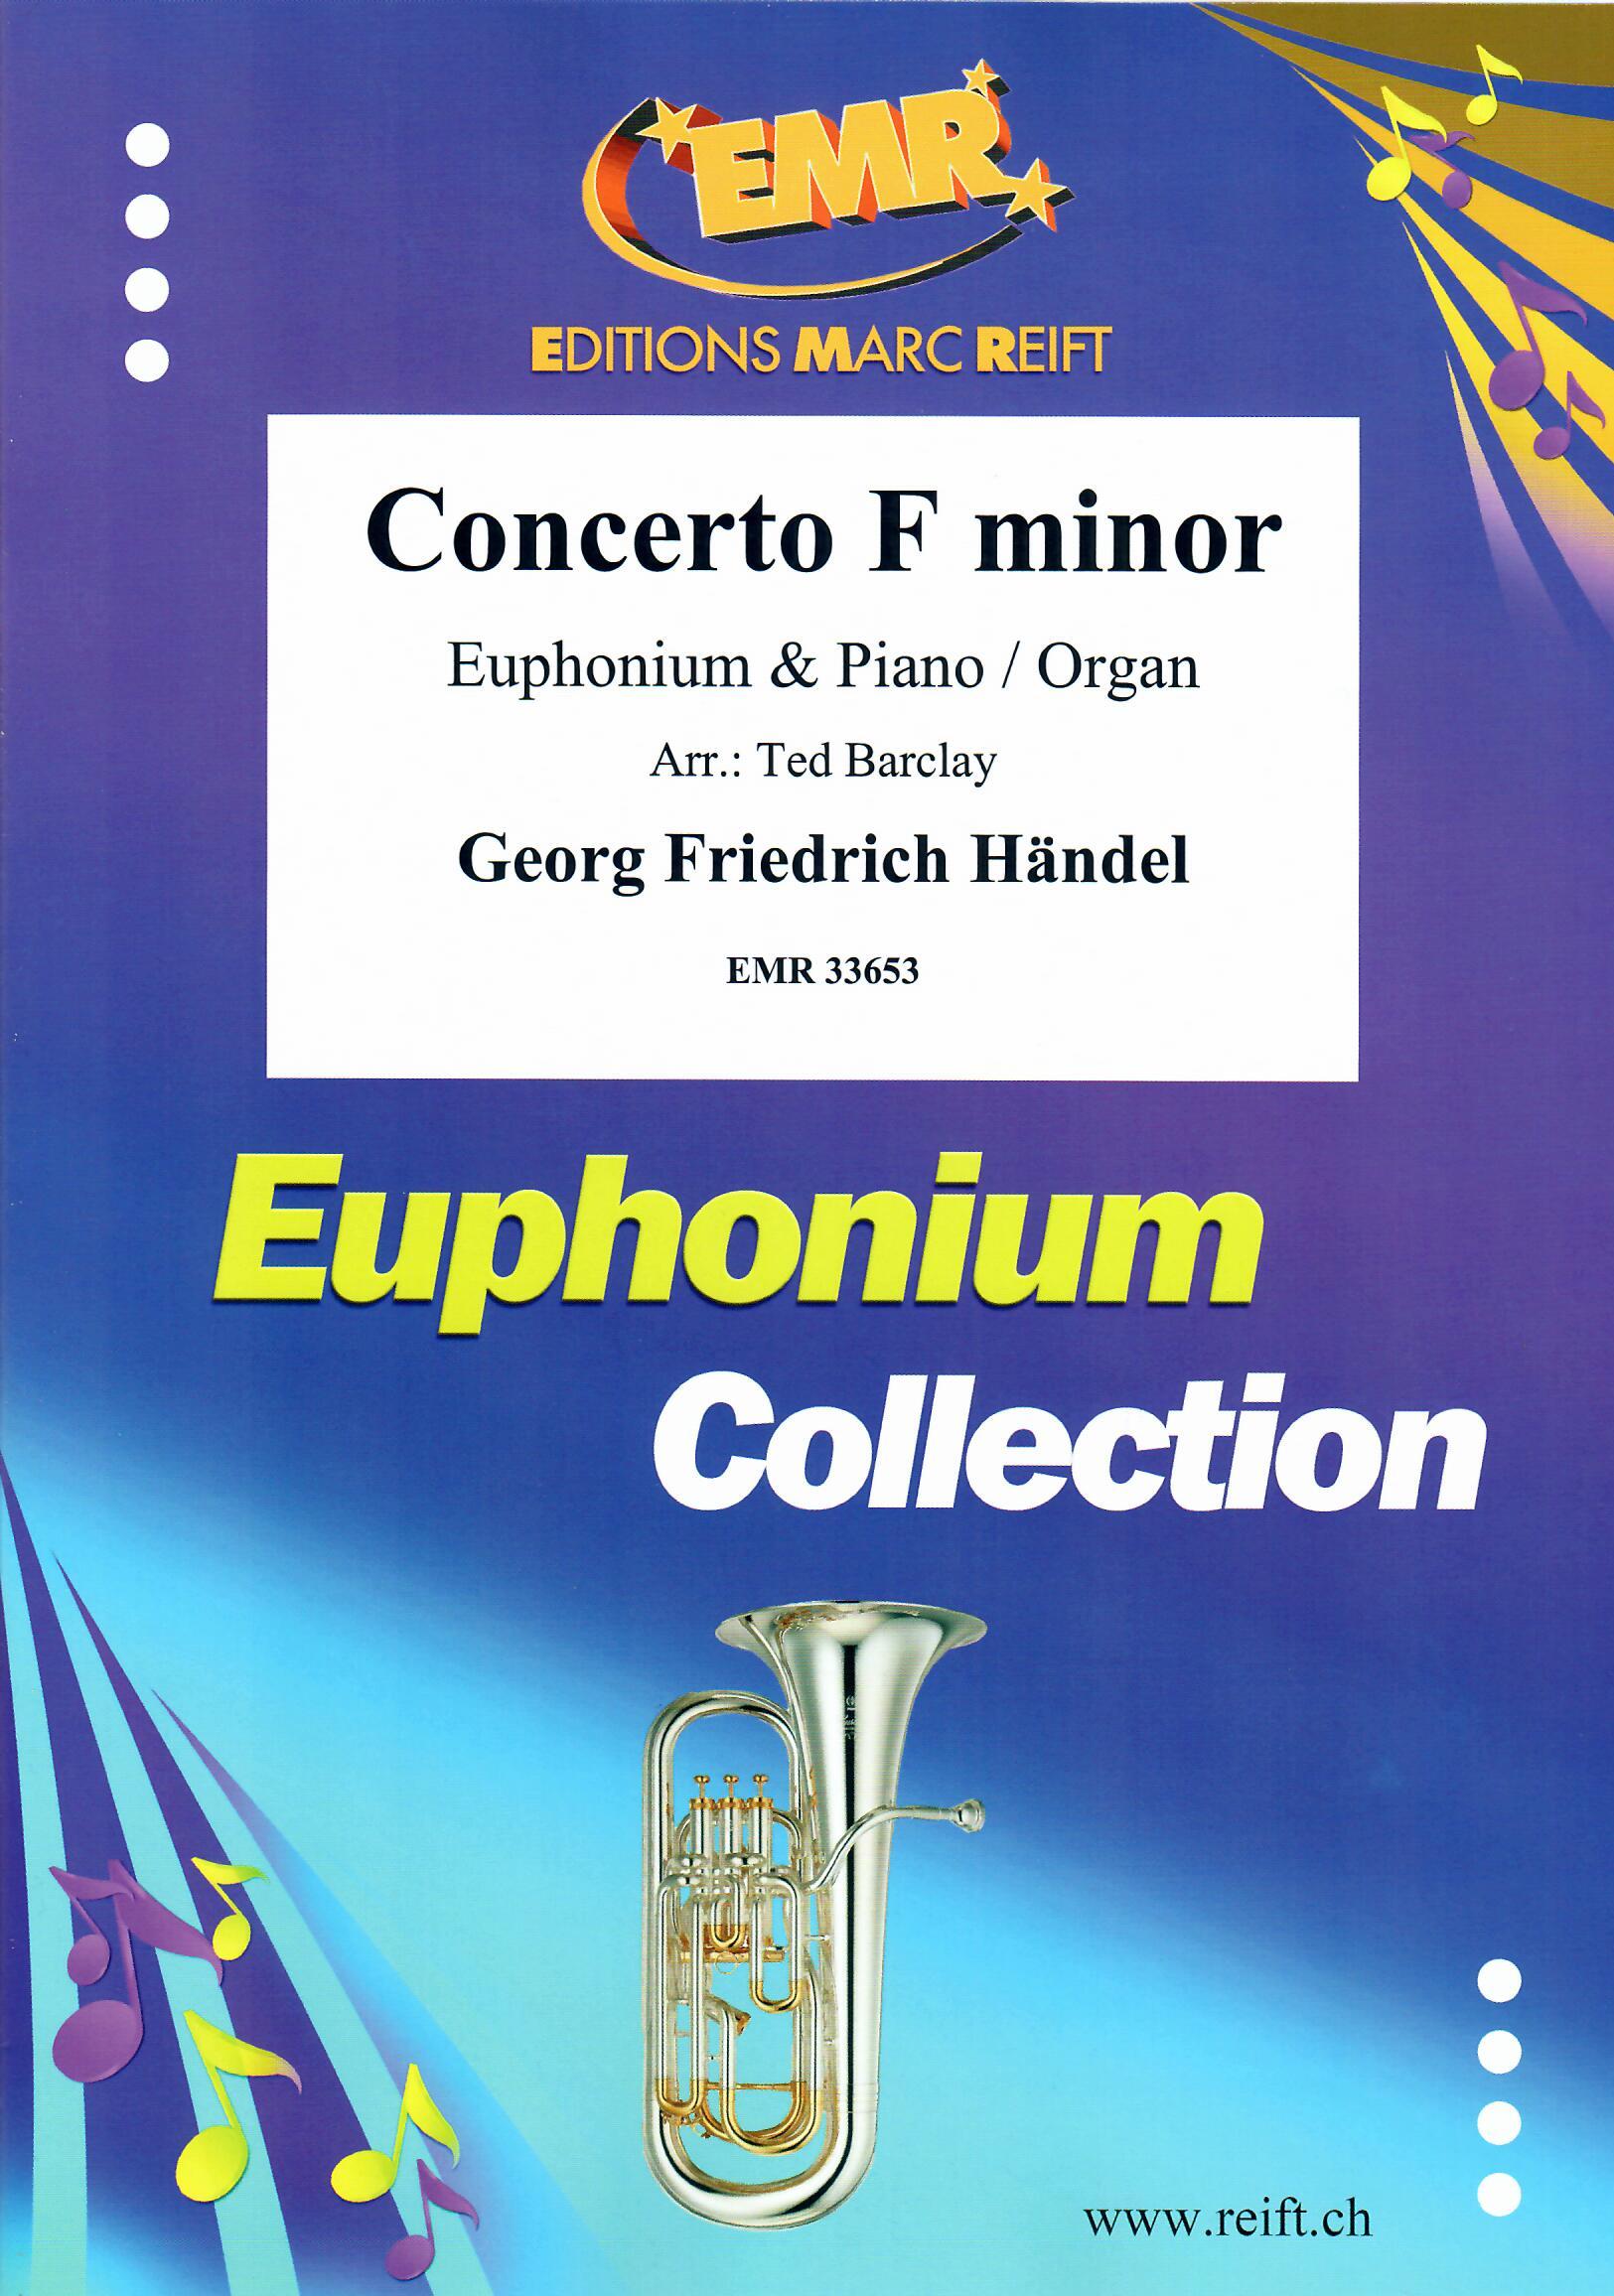 CONCERTO F MINOR, SOLOS - Euphonium